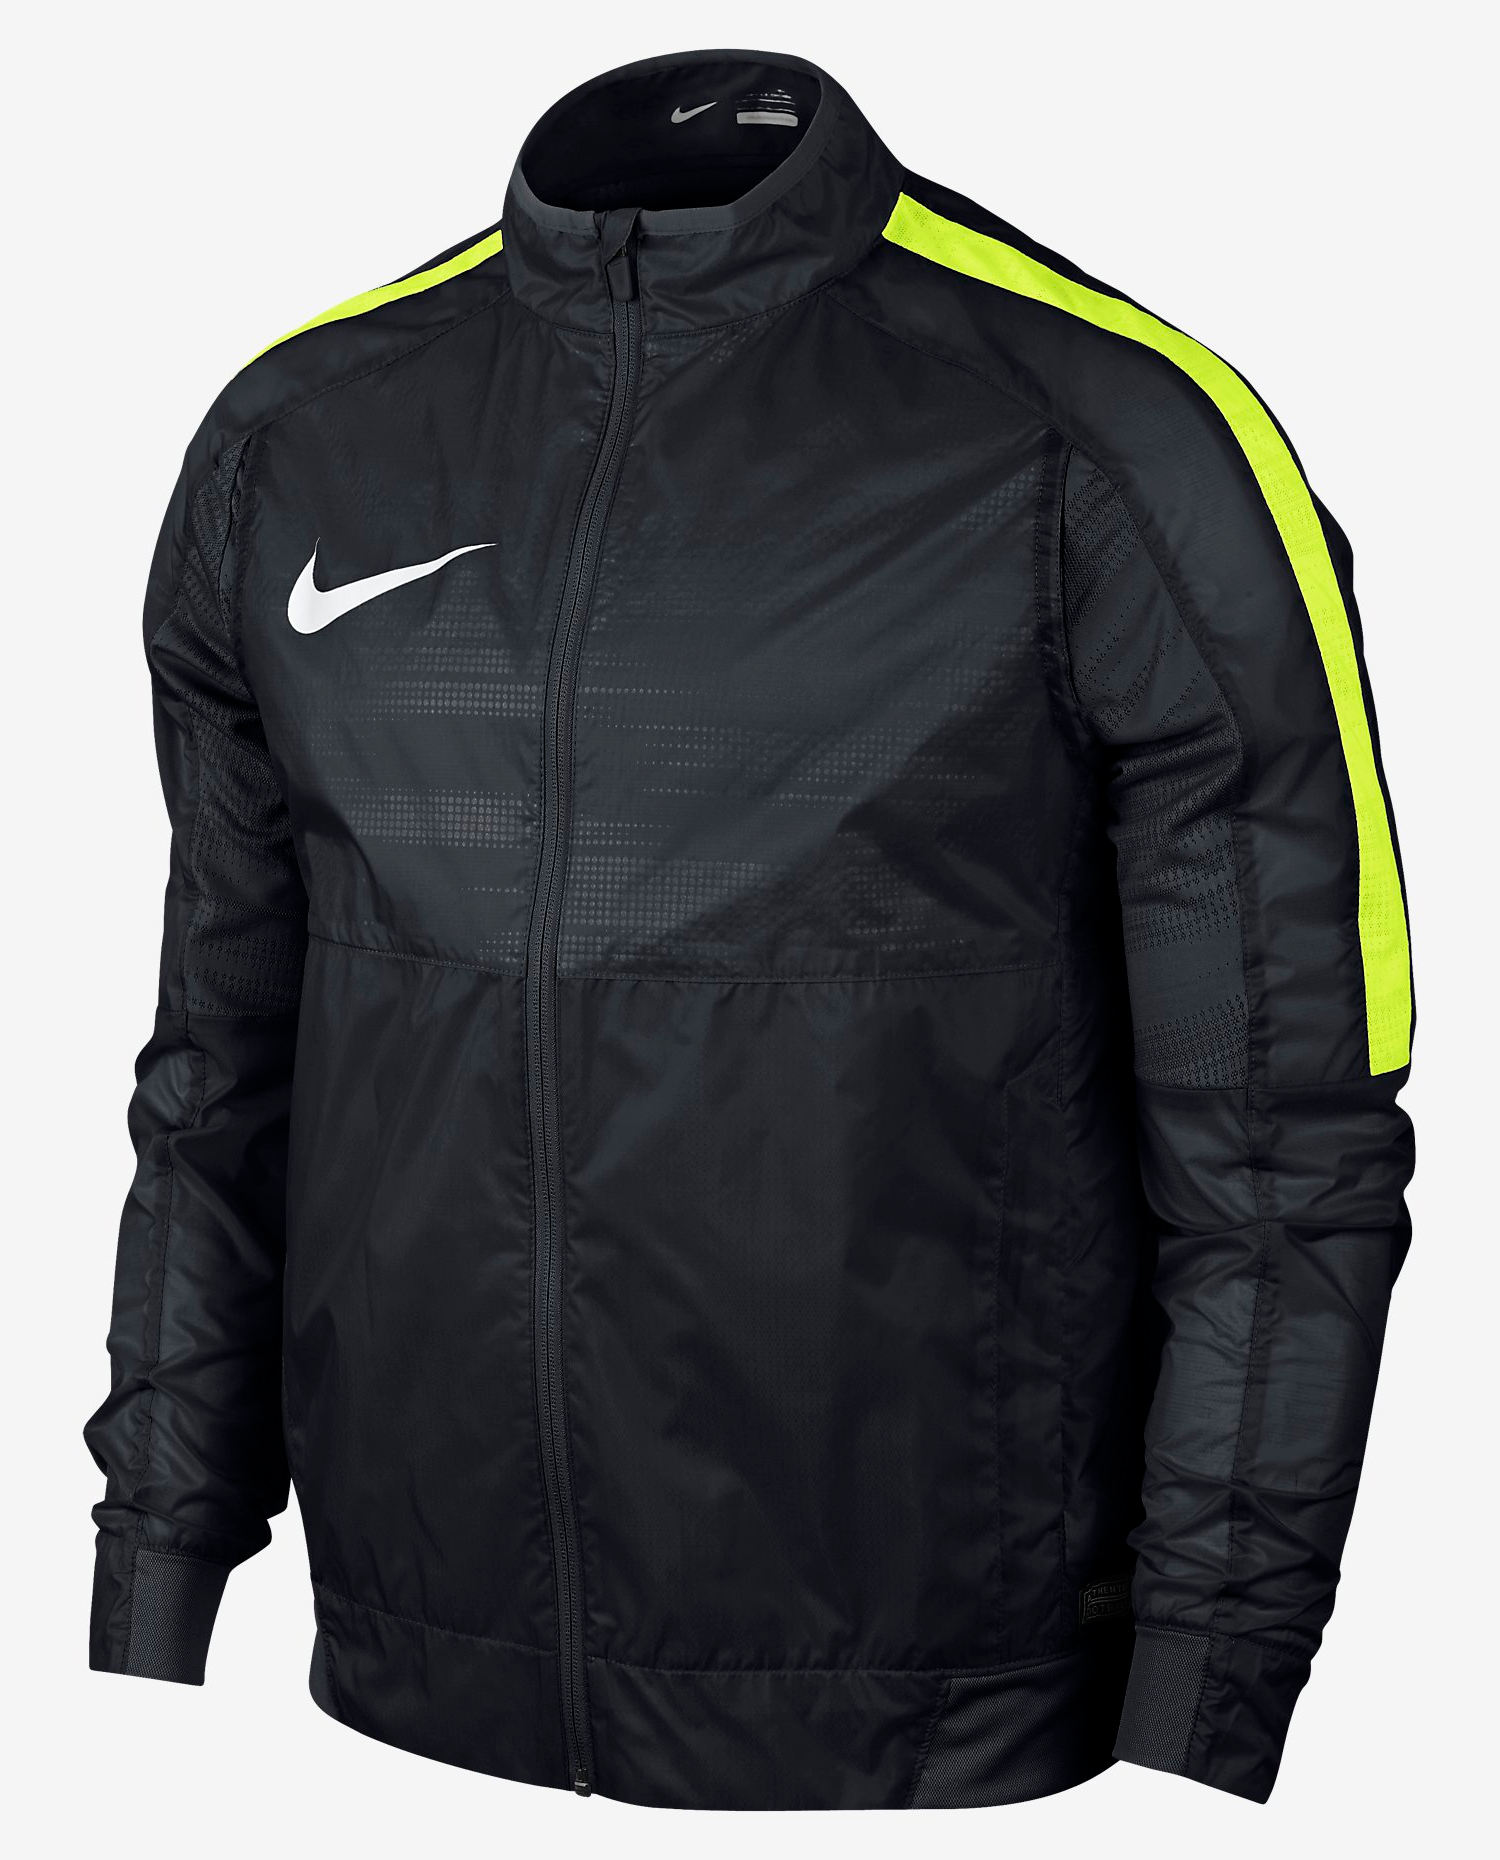 Graphic Lightweight Woven Nike Training Jacket ZIP POCKETS Men | eBay